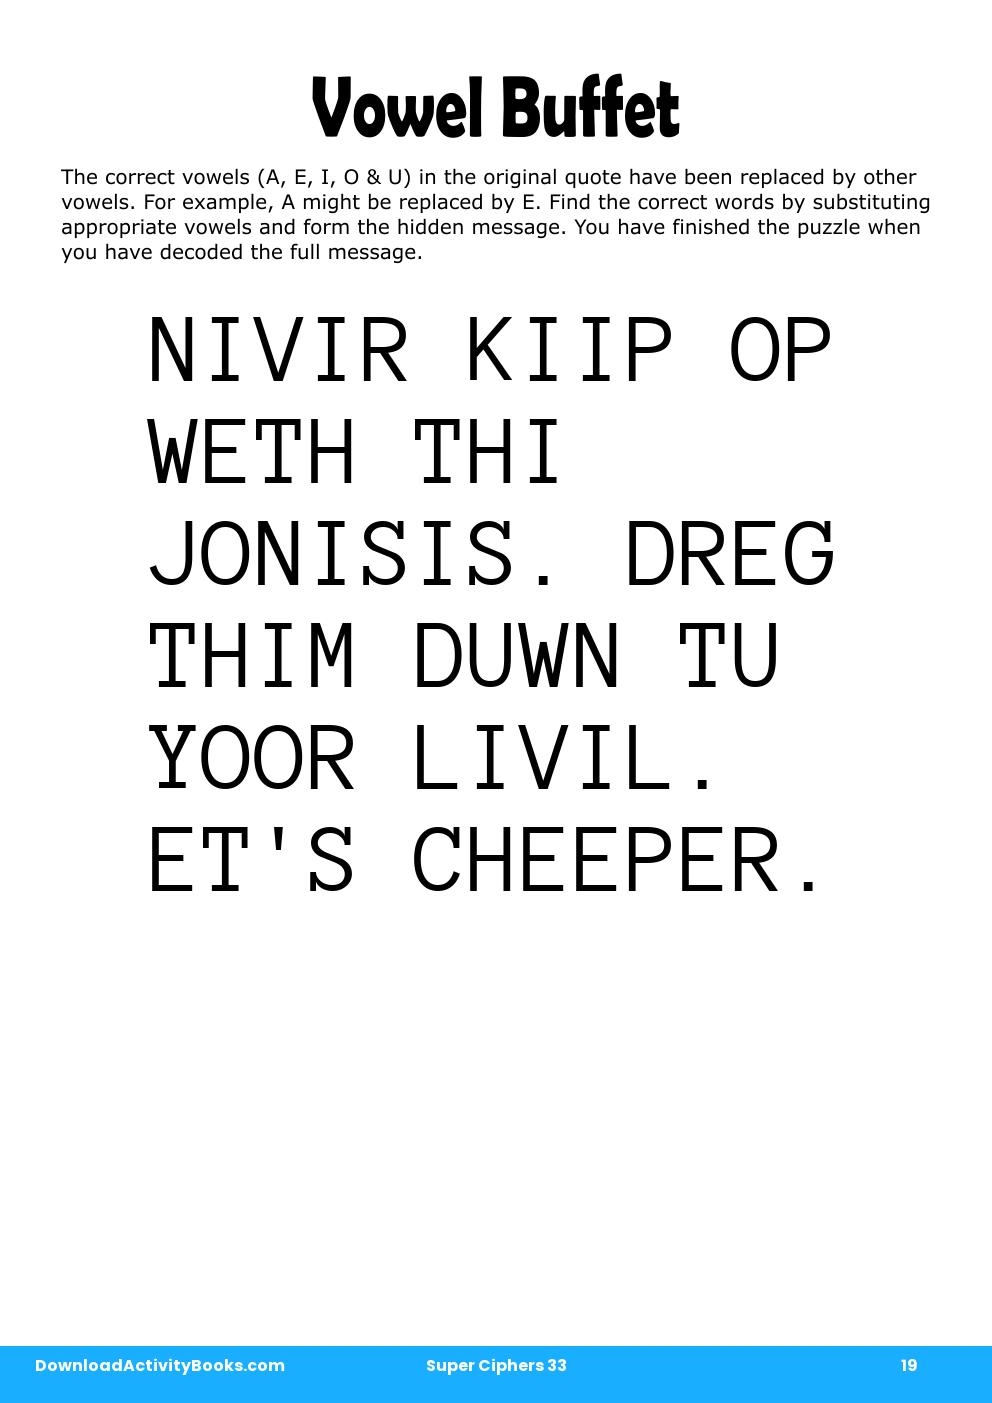 Vowel Buffet in Super Ciphers 33